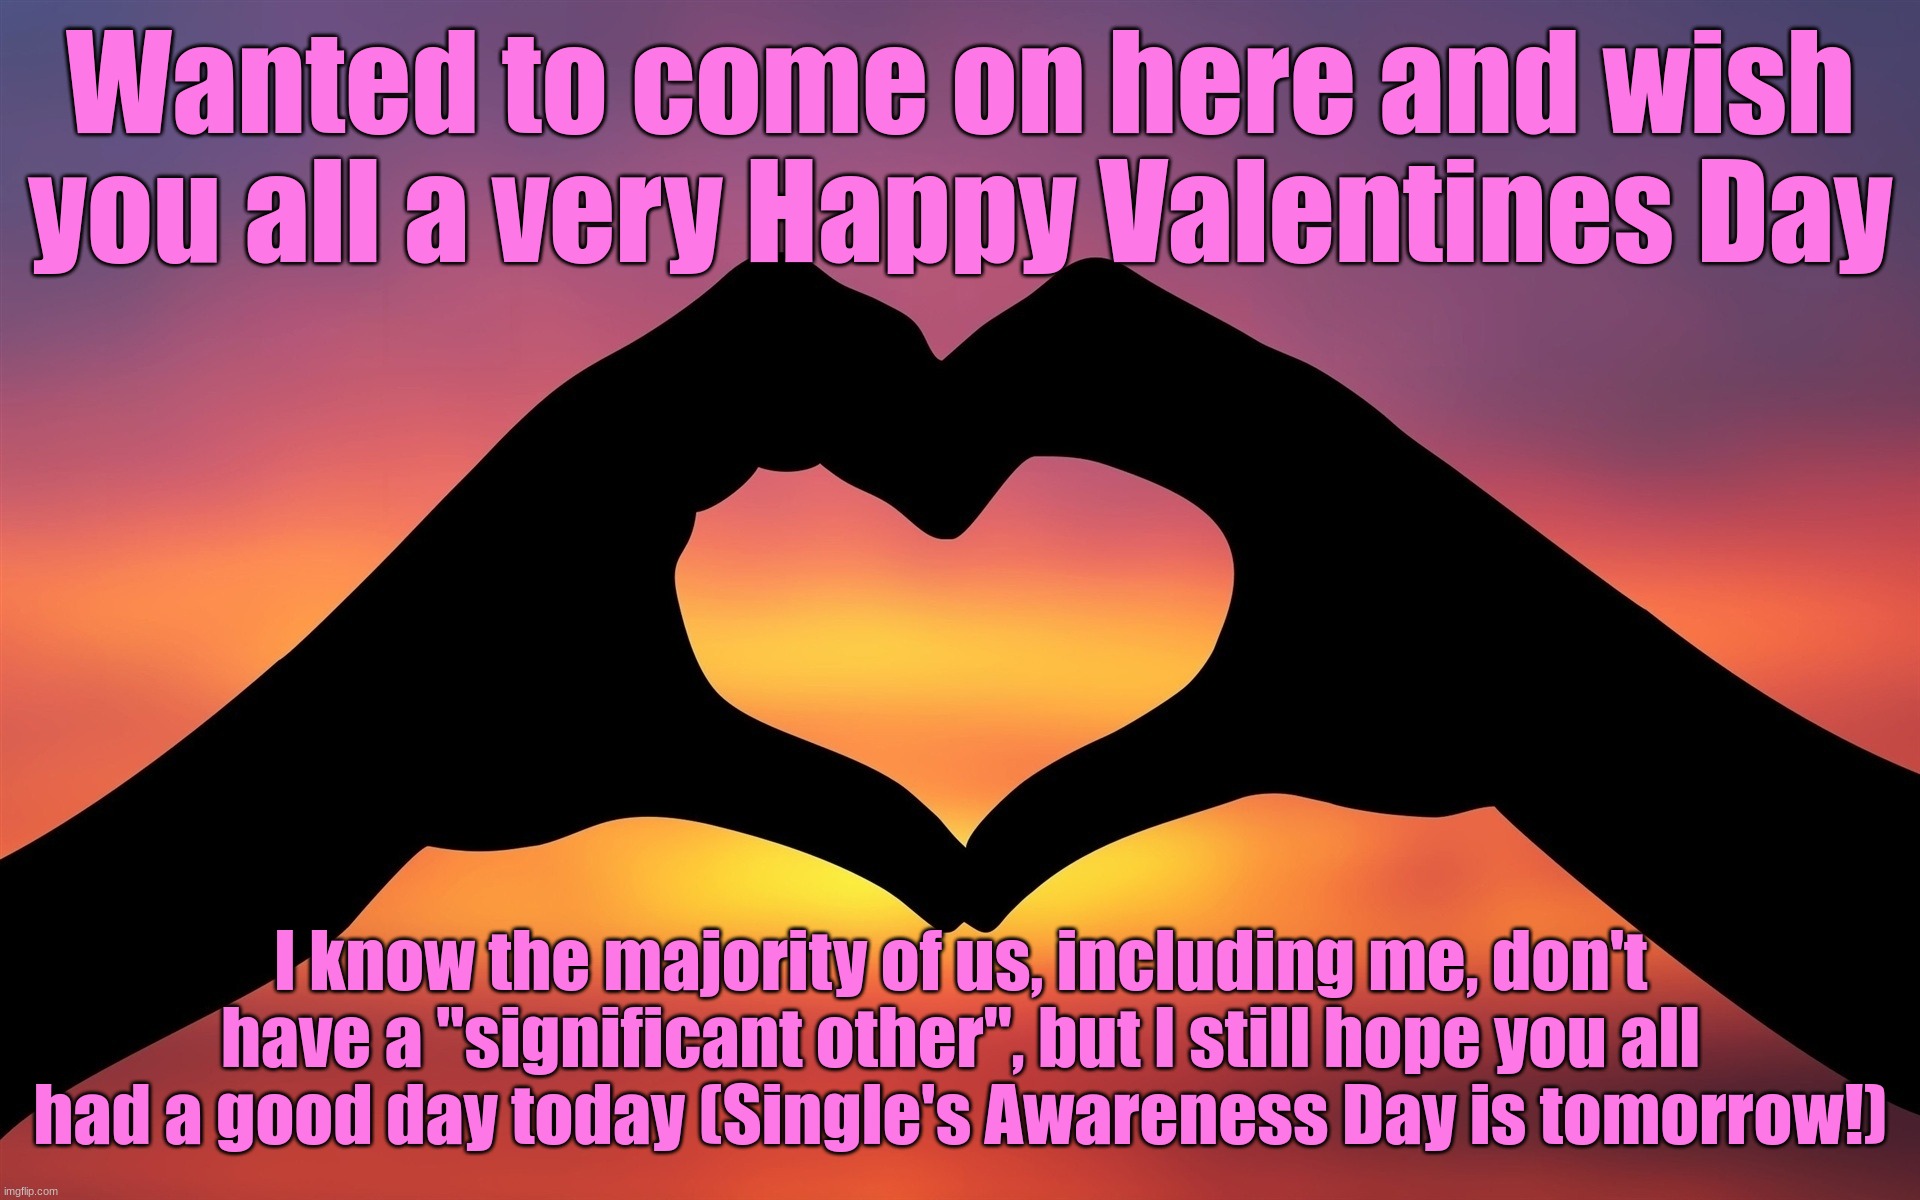 52+ Creative And Effective Valentines Day Marketing Slogans